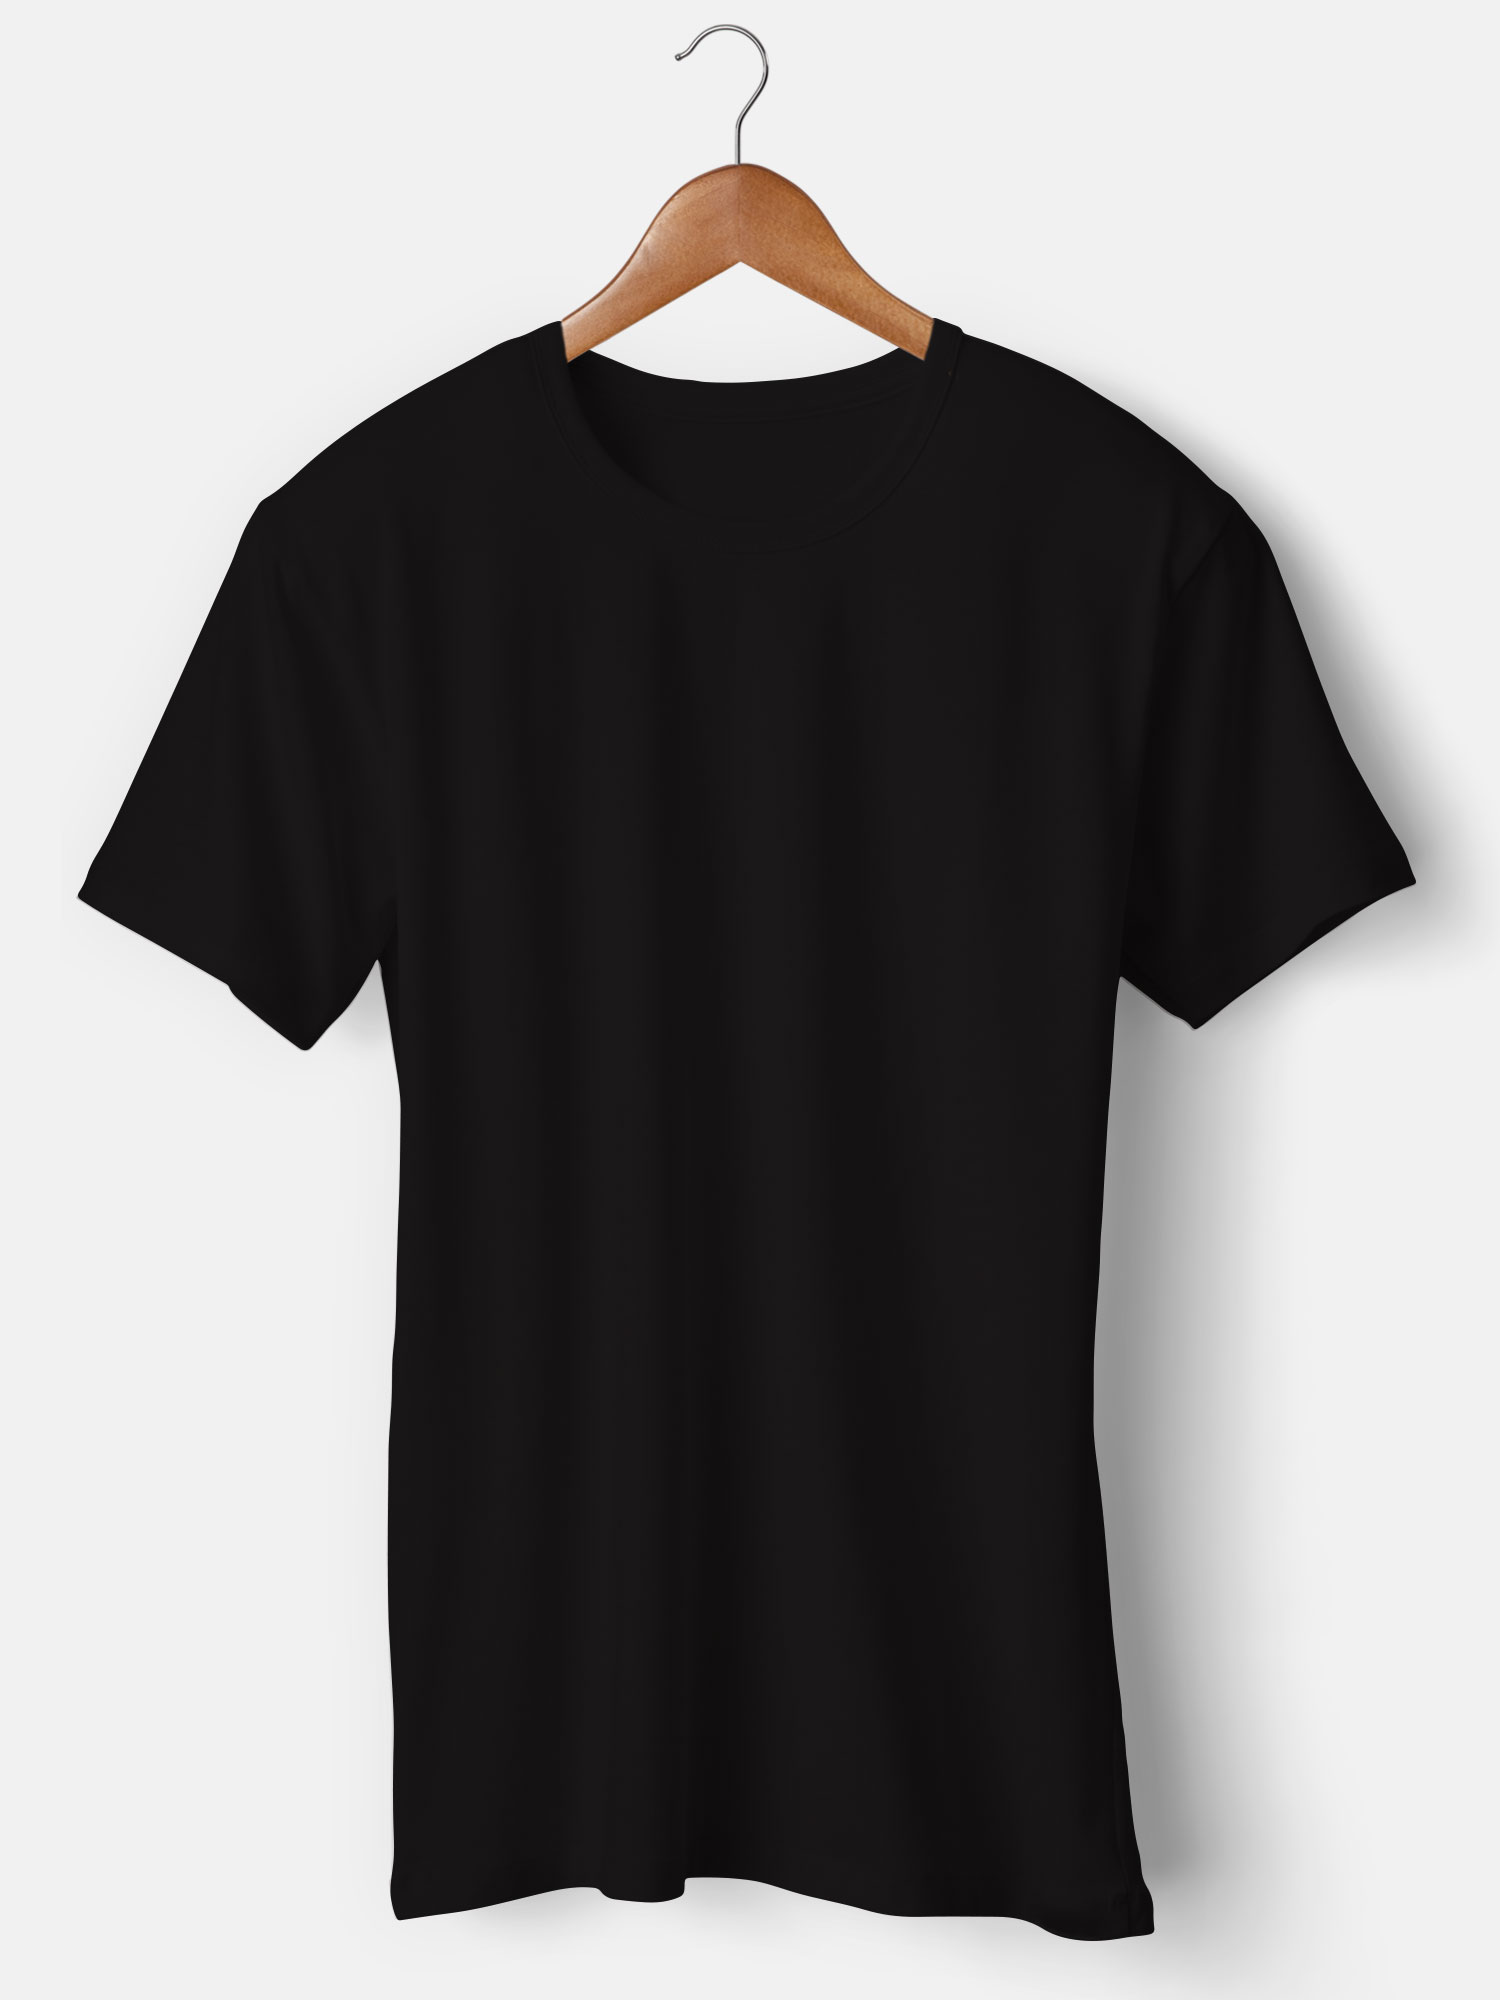 Customized Round Neck Black T-Shirt Printing